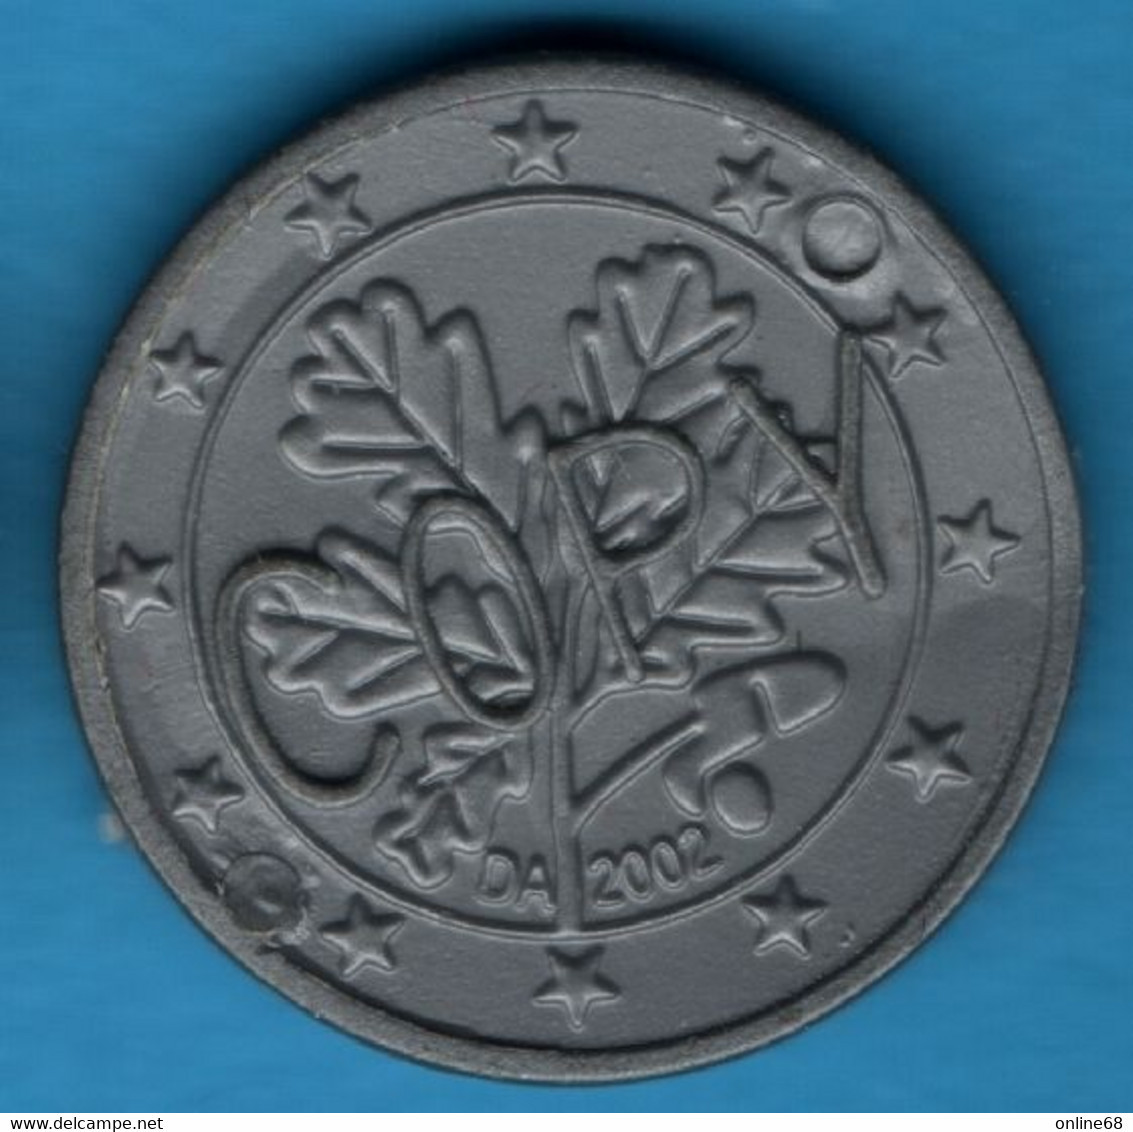 DEUTSCHLAND EURO 5 + 50 CENTS 2002 COPY PLASTIC - Errors And Oddities